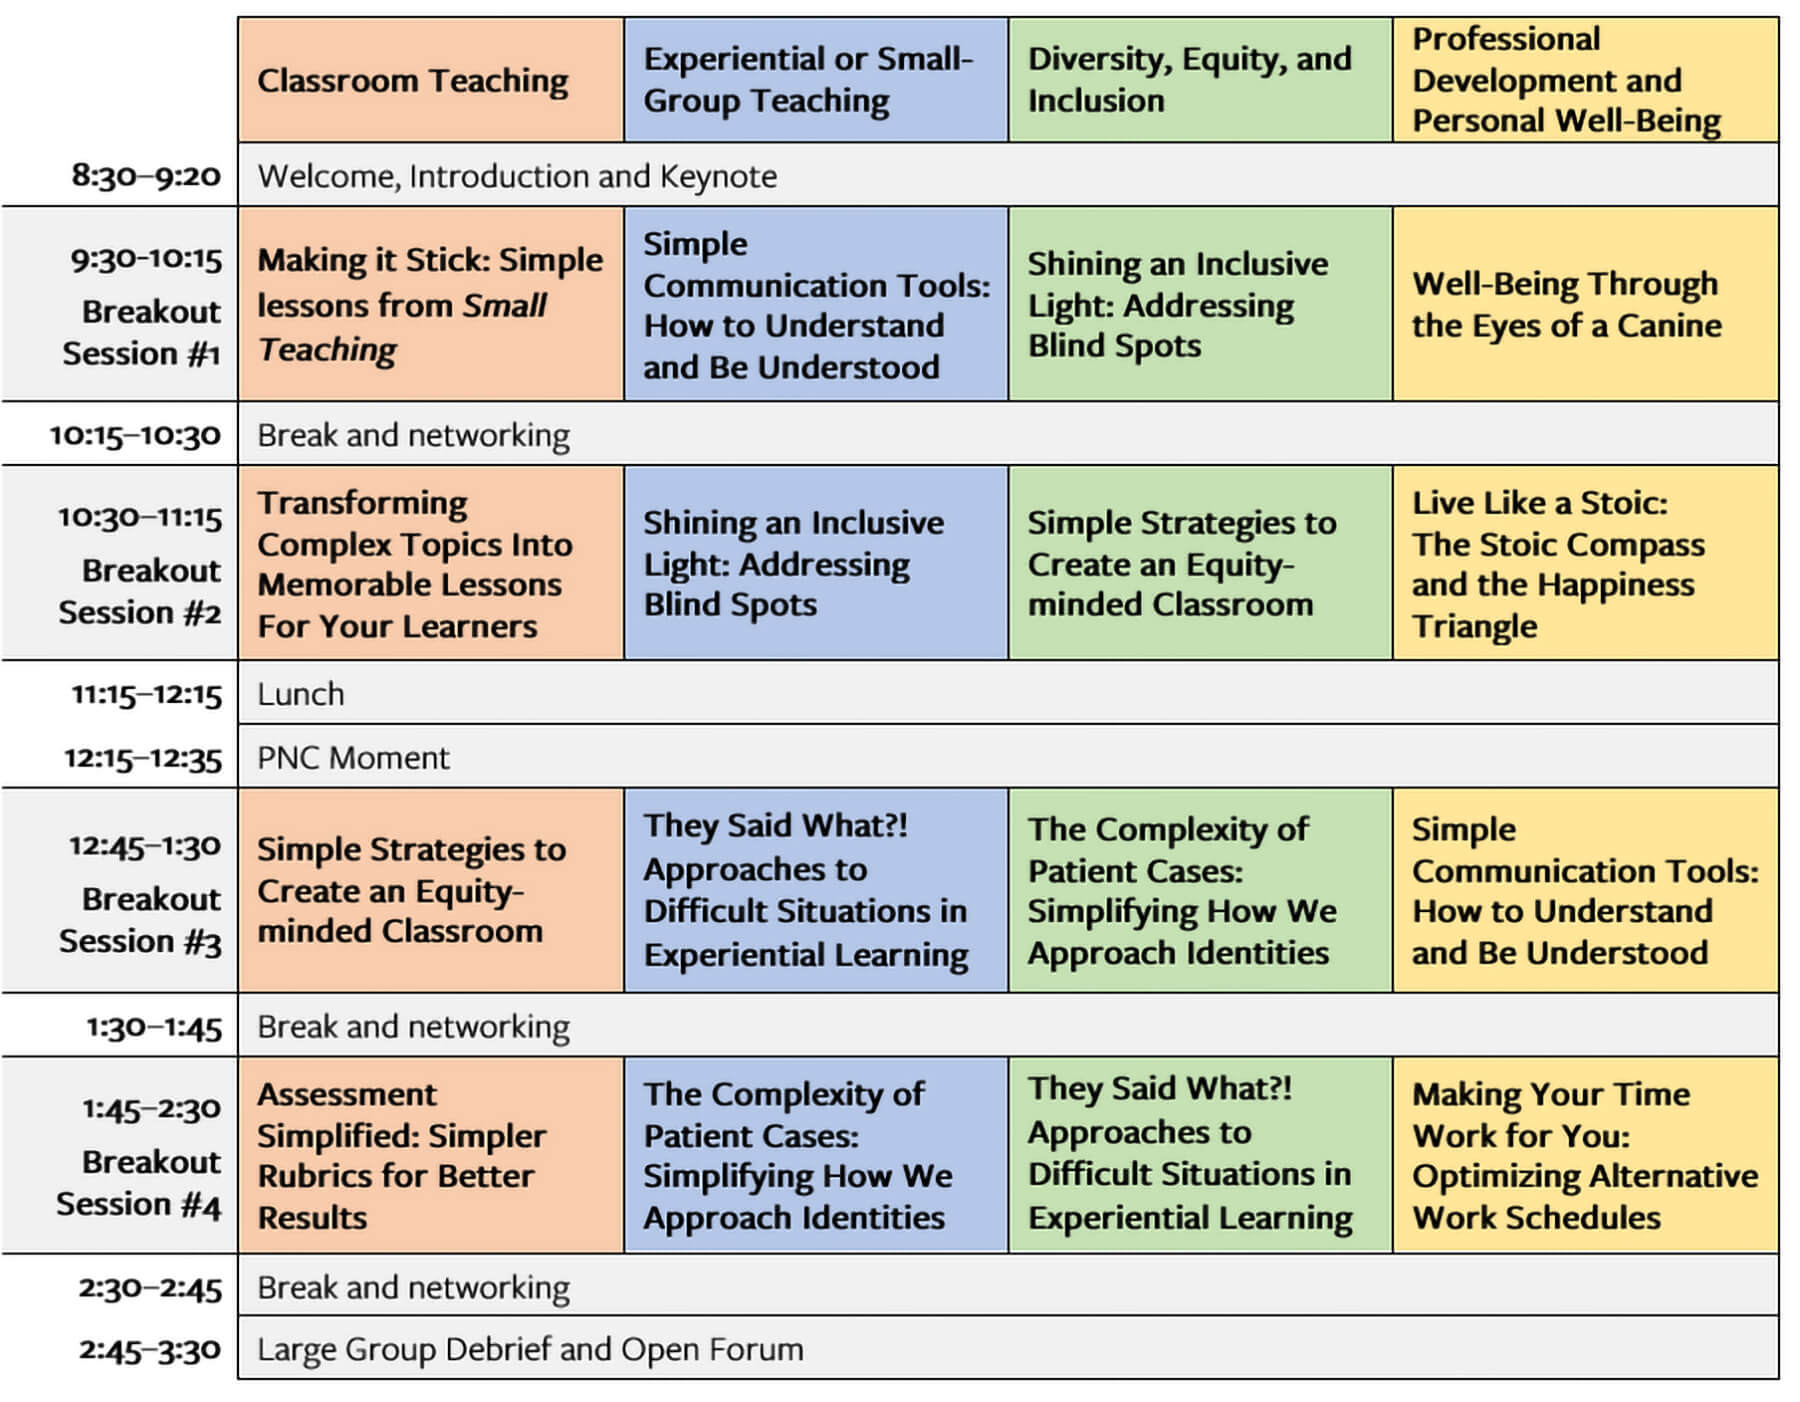 Visual matrix of the Teachers' Seminar schedule by theme.